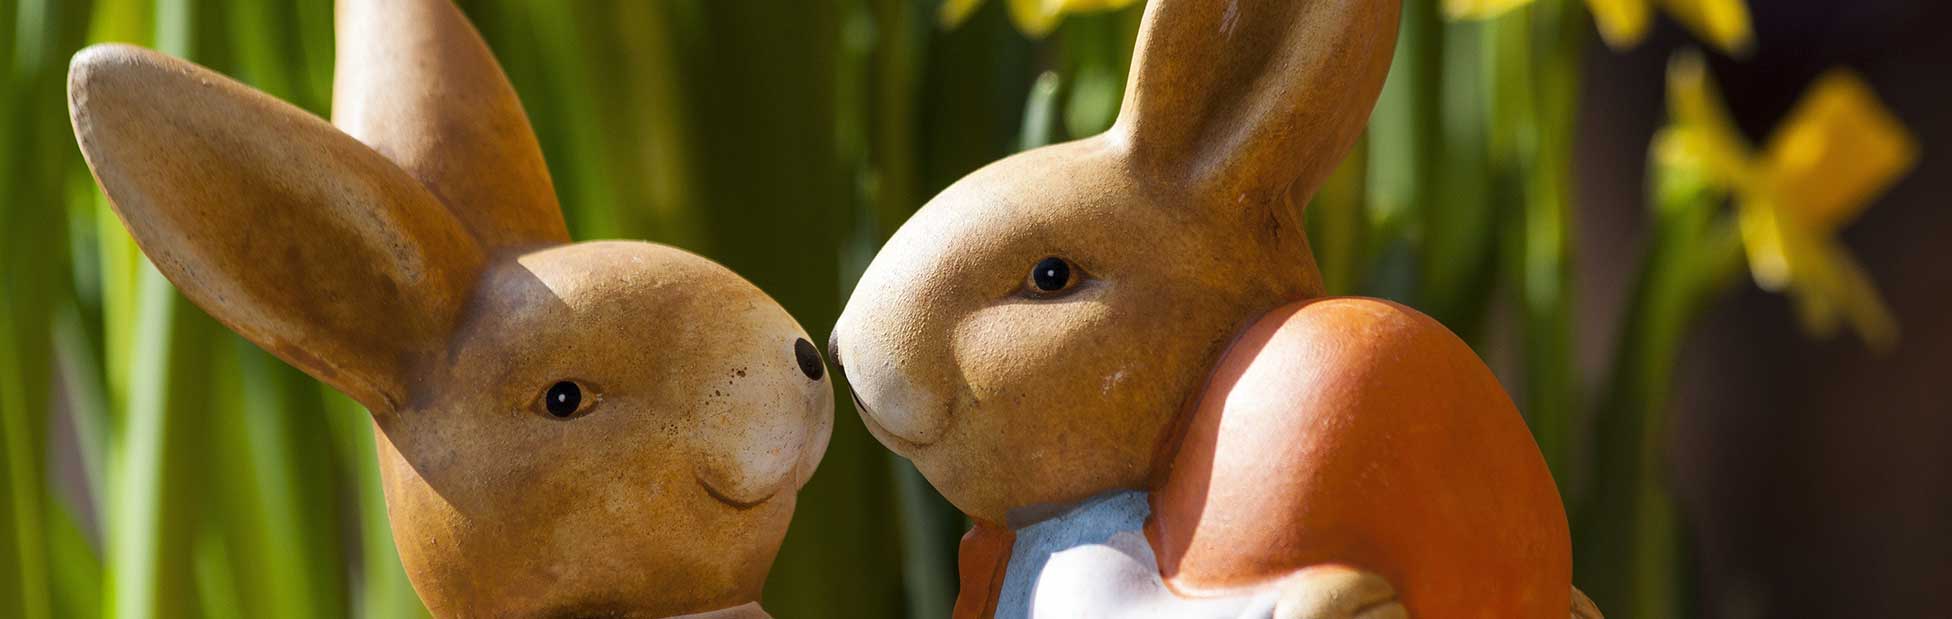 Garden ornament Easter bunnies holding egg